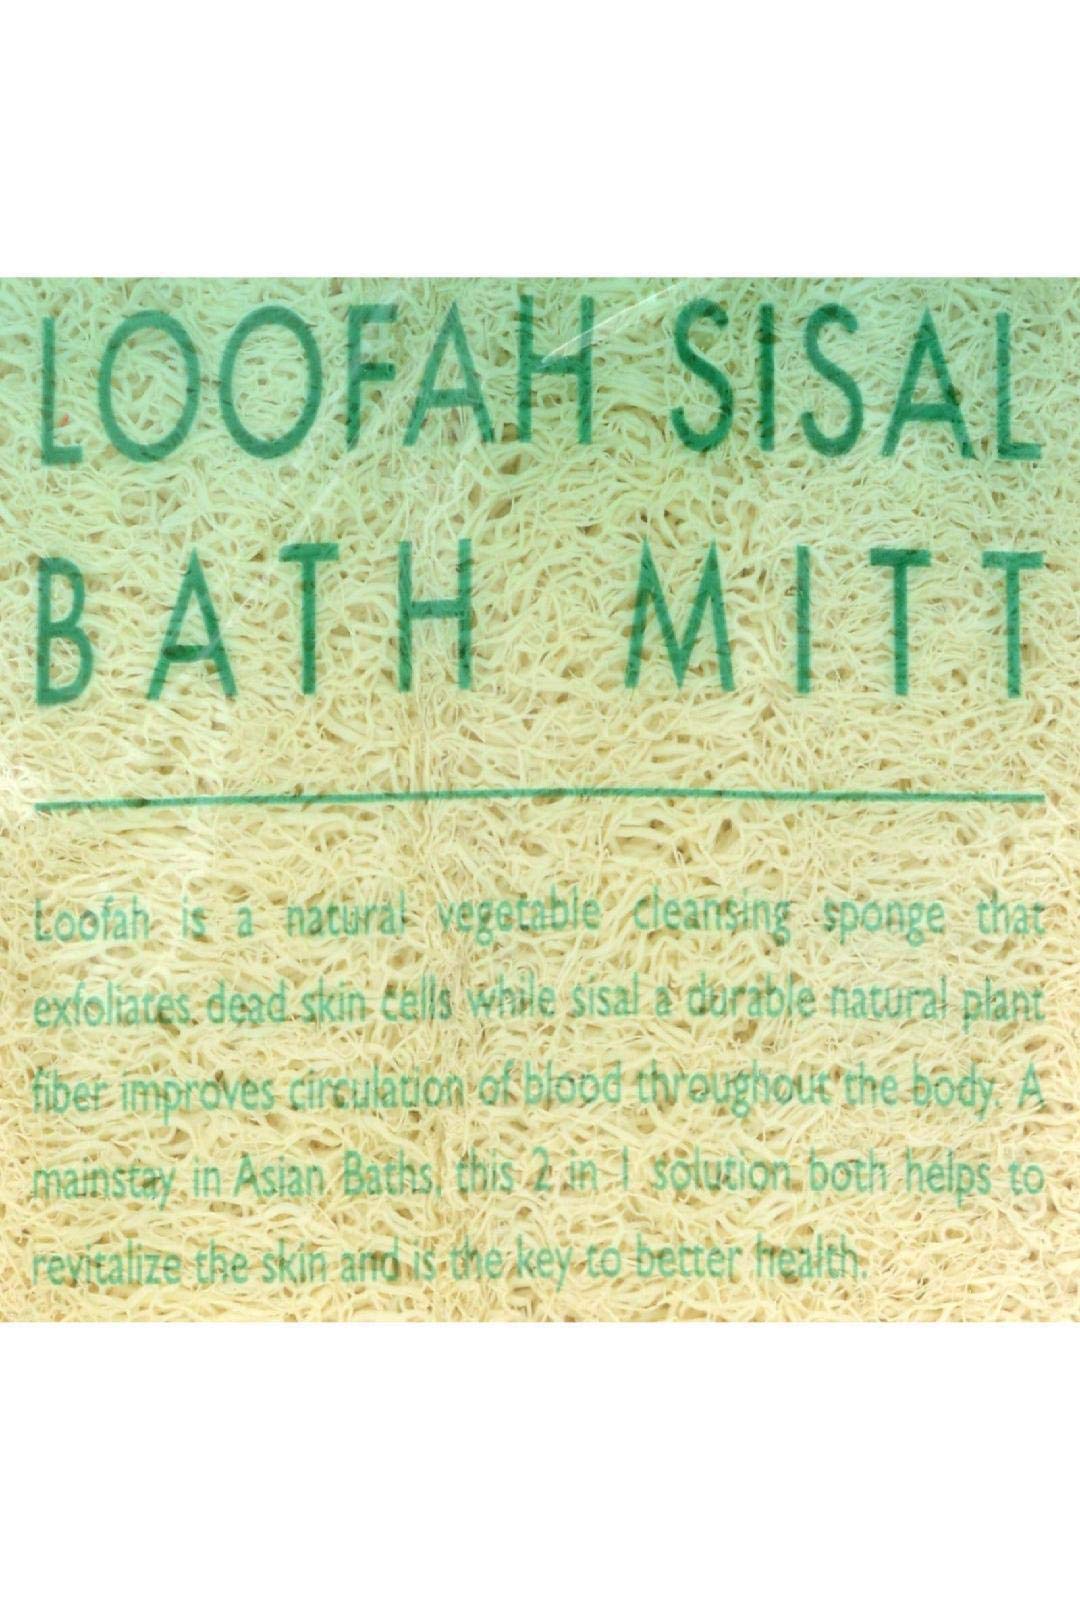 EARTH THERAPEUTICS Loofah Sisal Bath Mitt, 1 EA